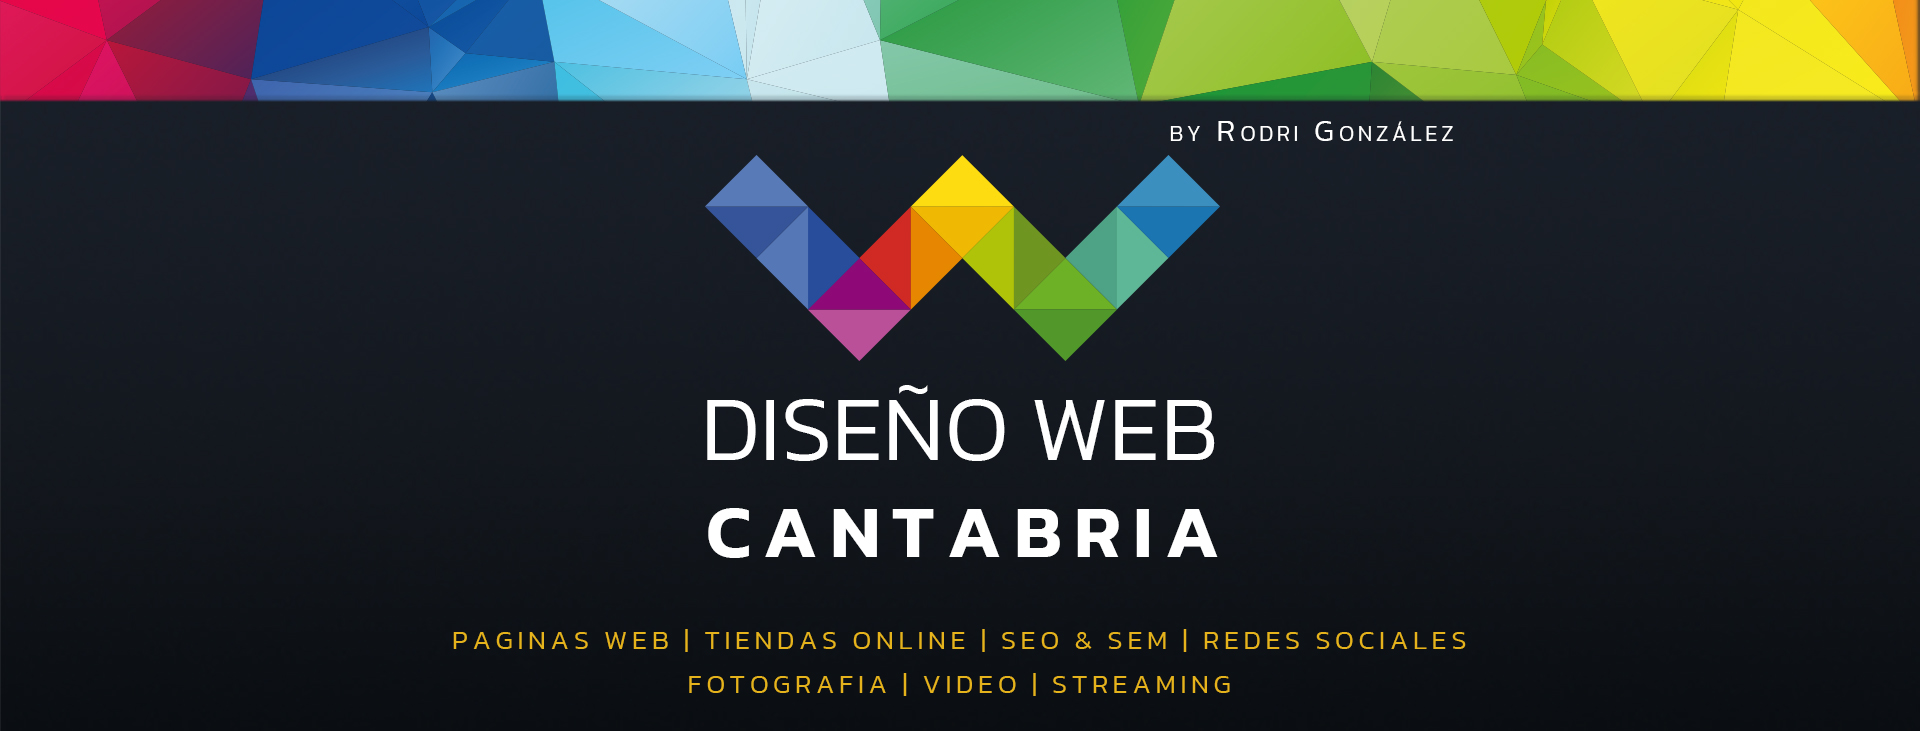 DISEÑO WEB CANTABRIA